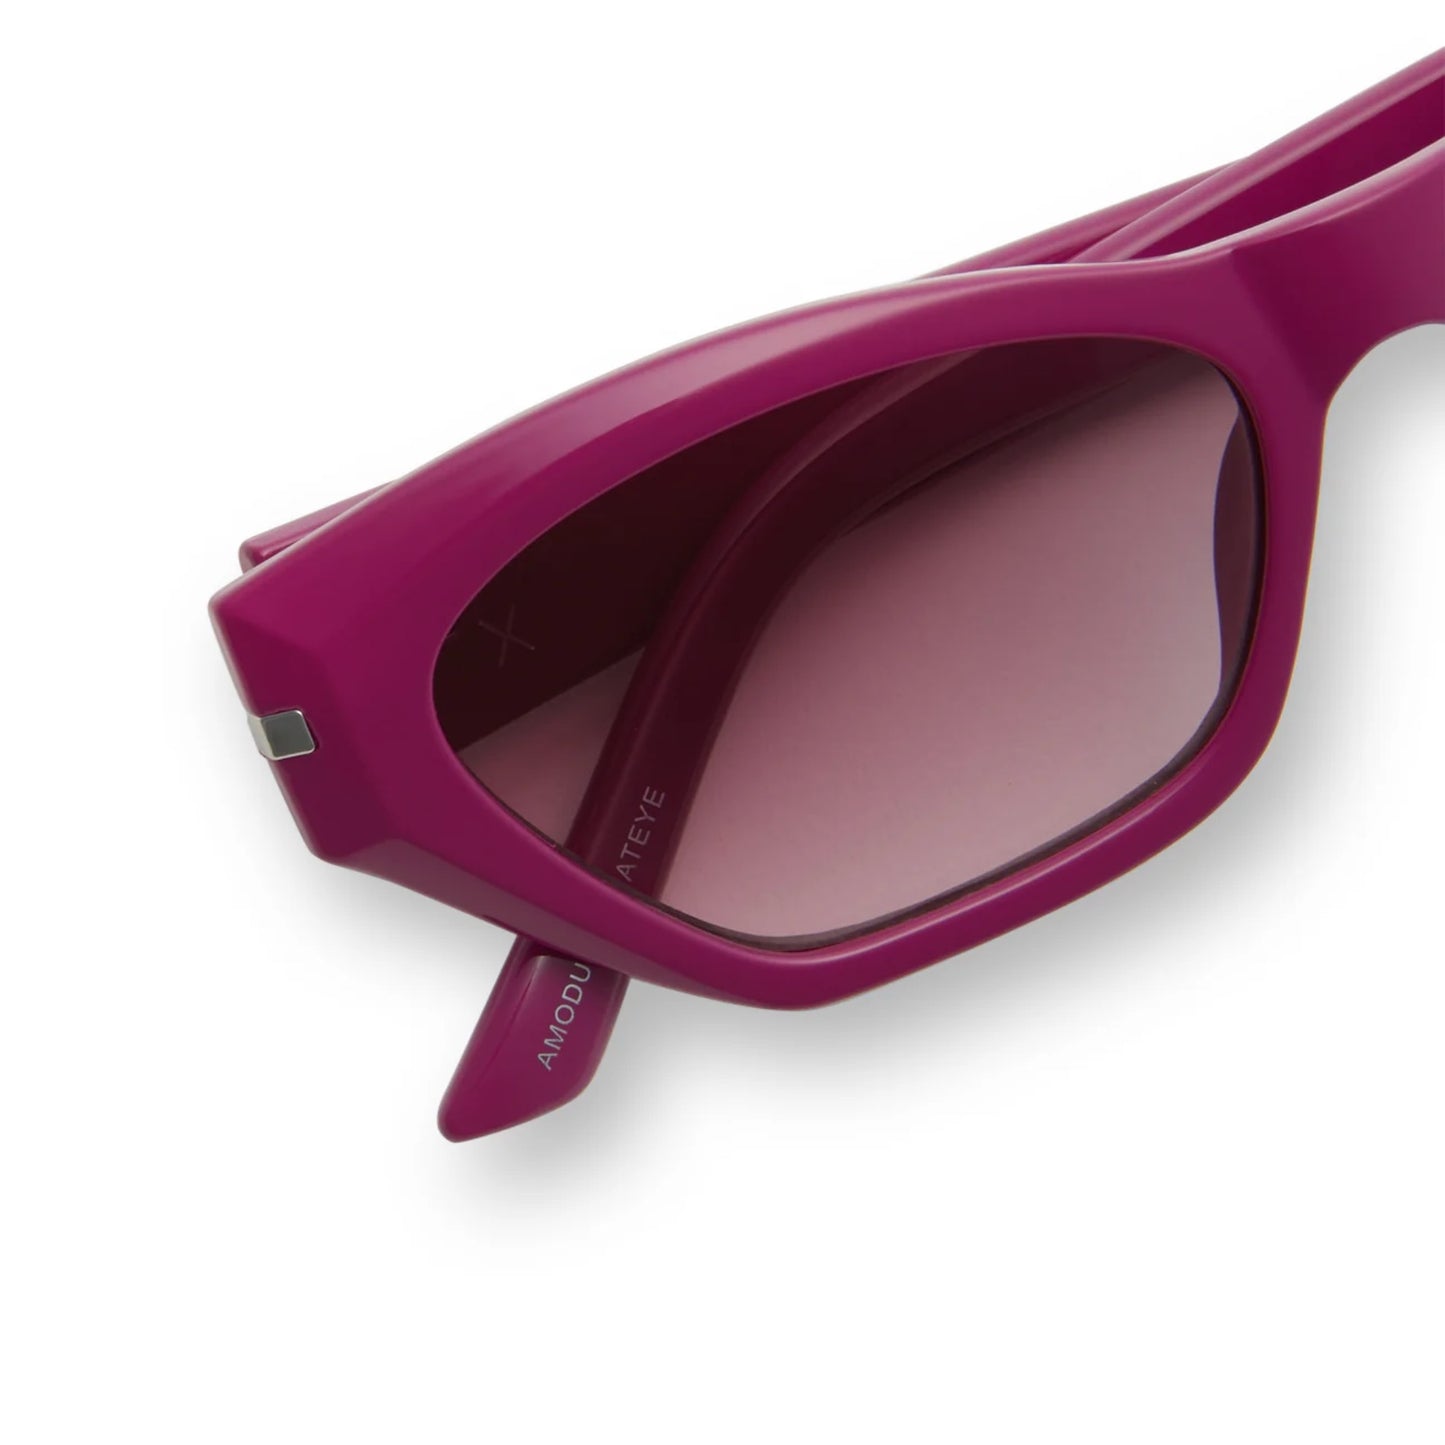 Sawtelle Sunglasses: Glossy Berry + Garnet